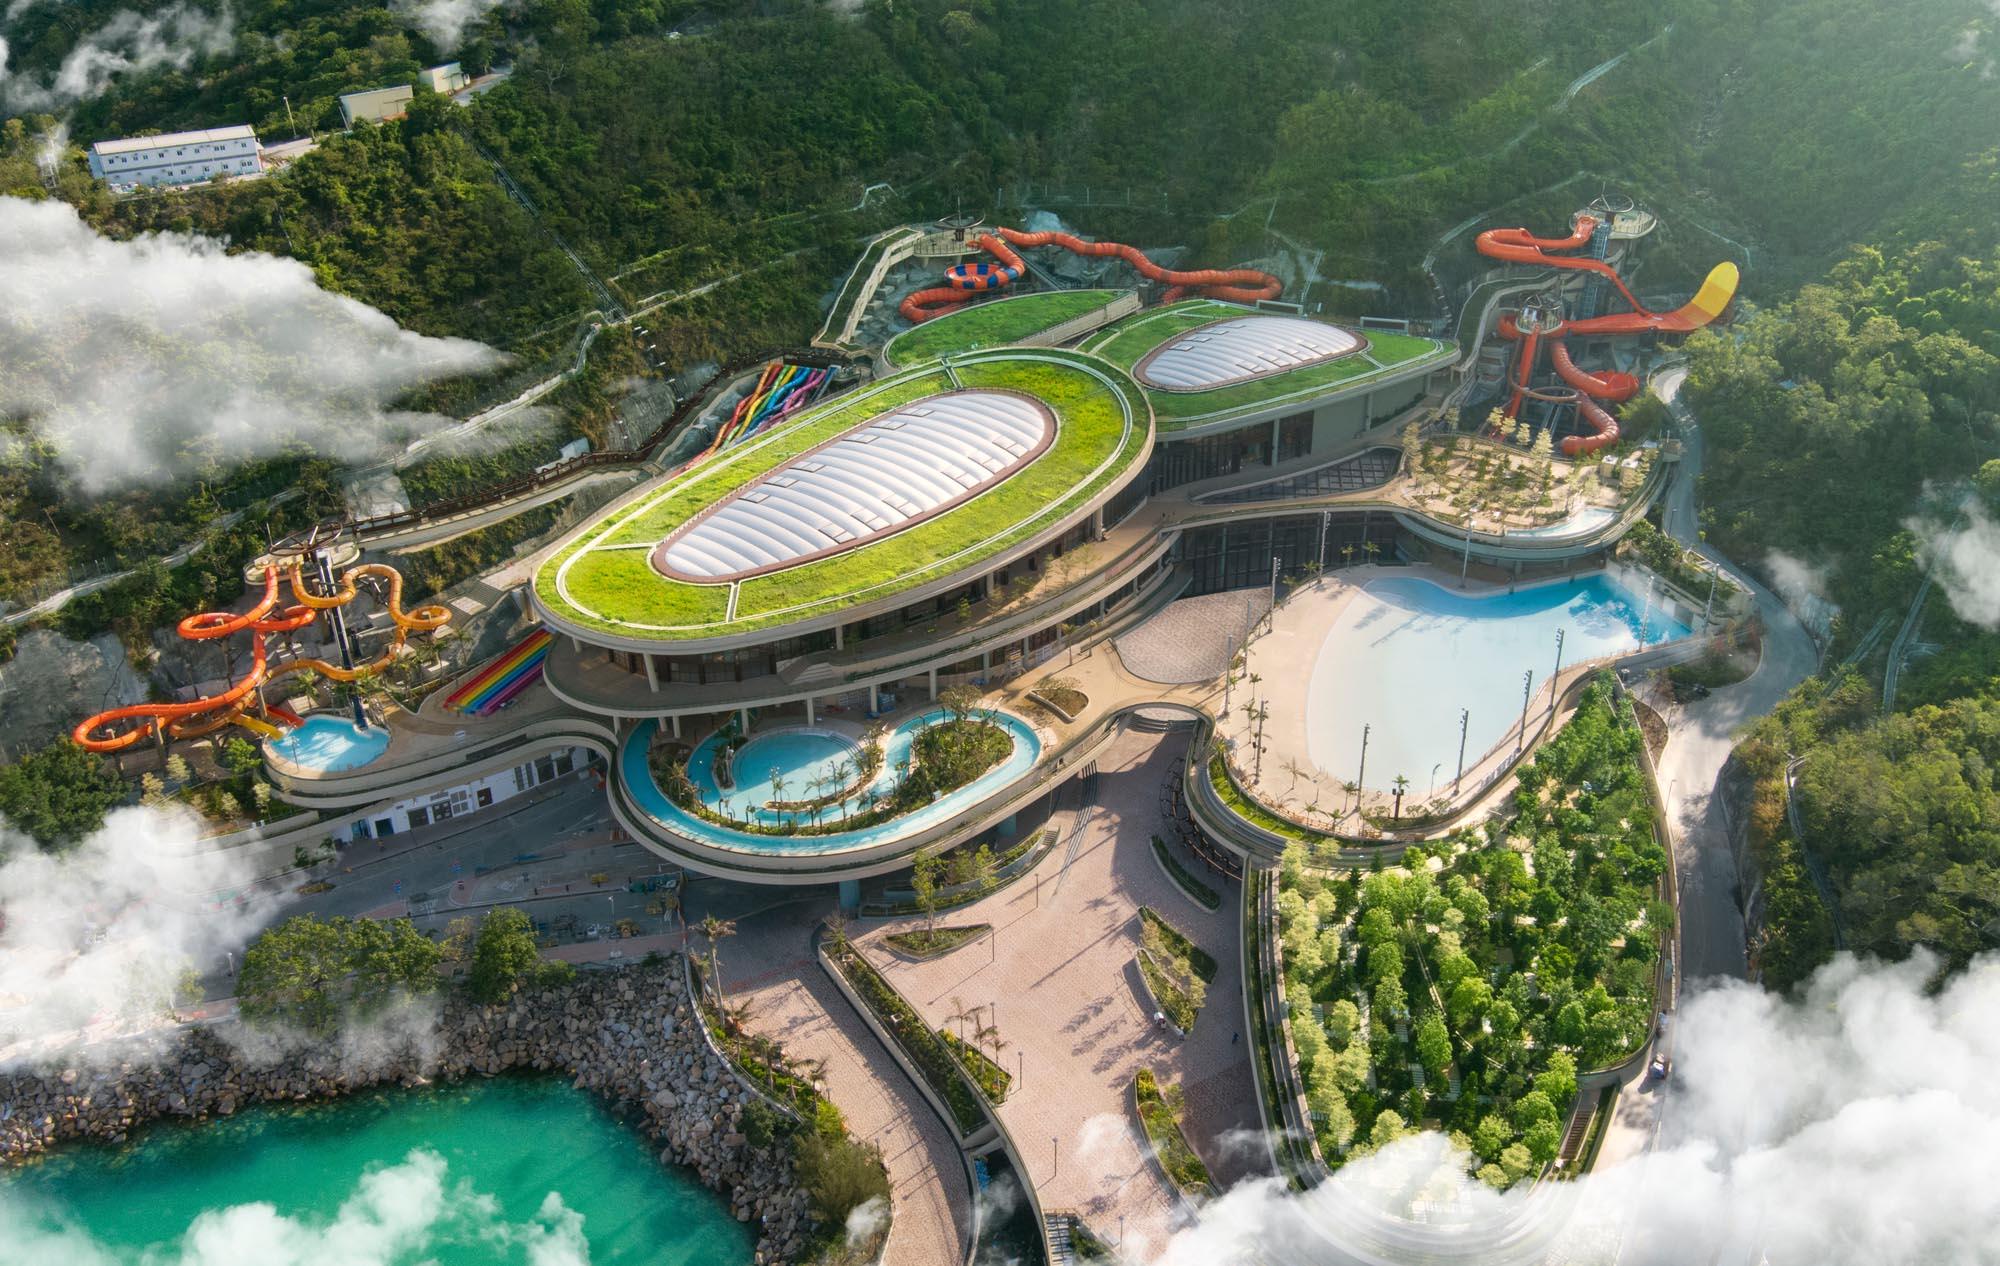 An aerial shot of the new Water World water park at Hong Kong's Ocean Park